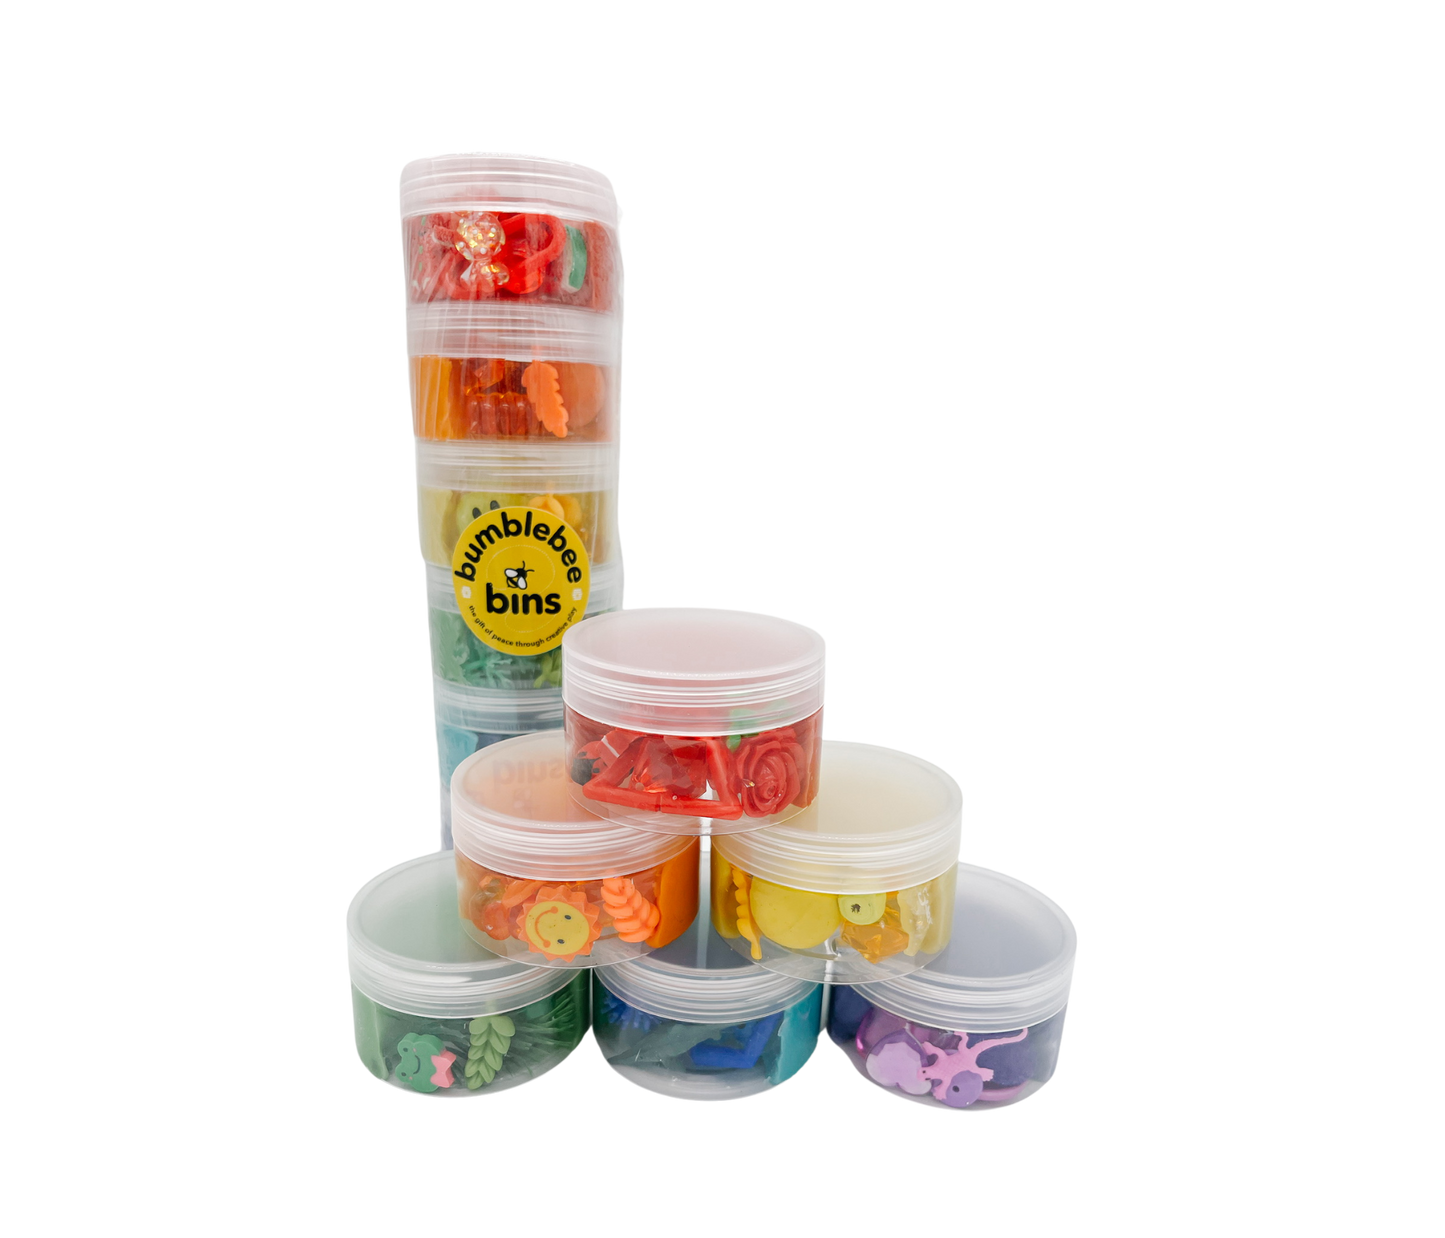 6-Pack Colors Play Dough Jars